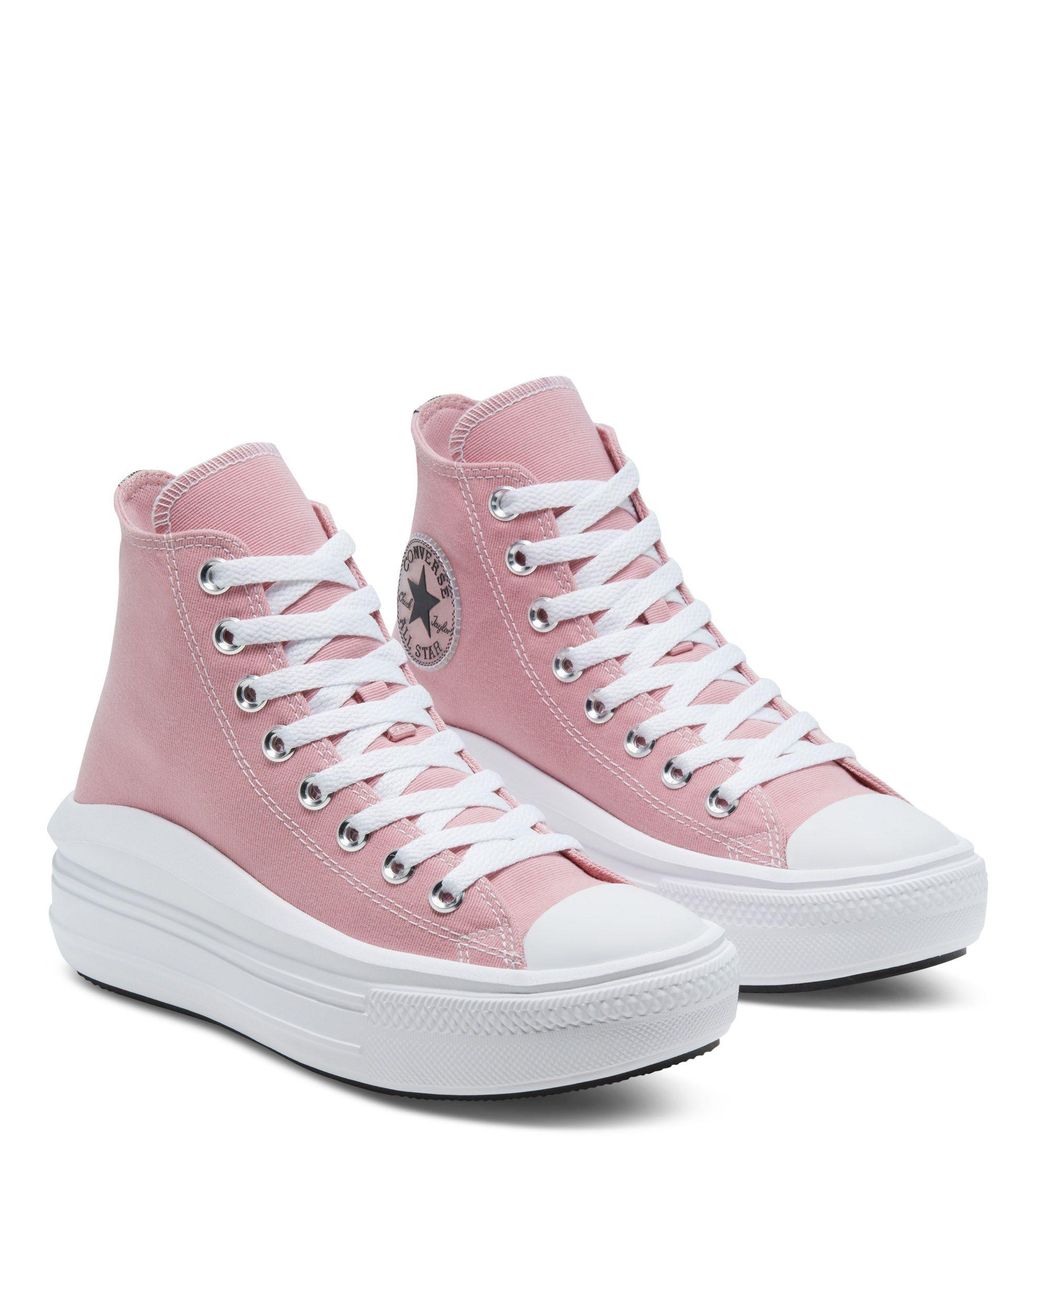 Pawnana Women's High Top Platform Sneakers Pink